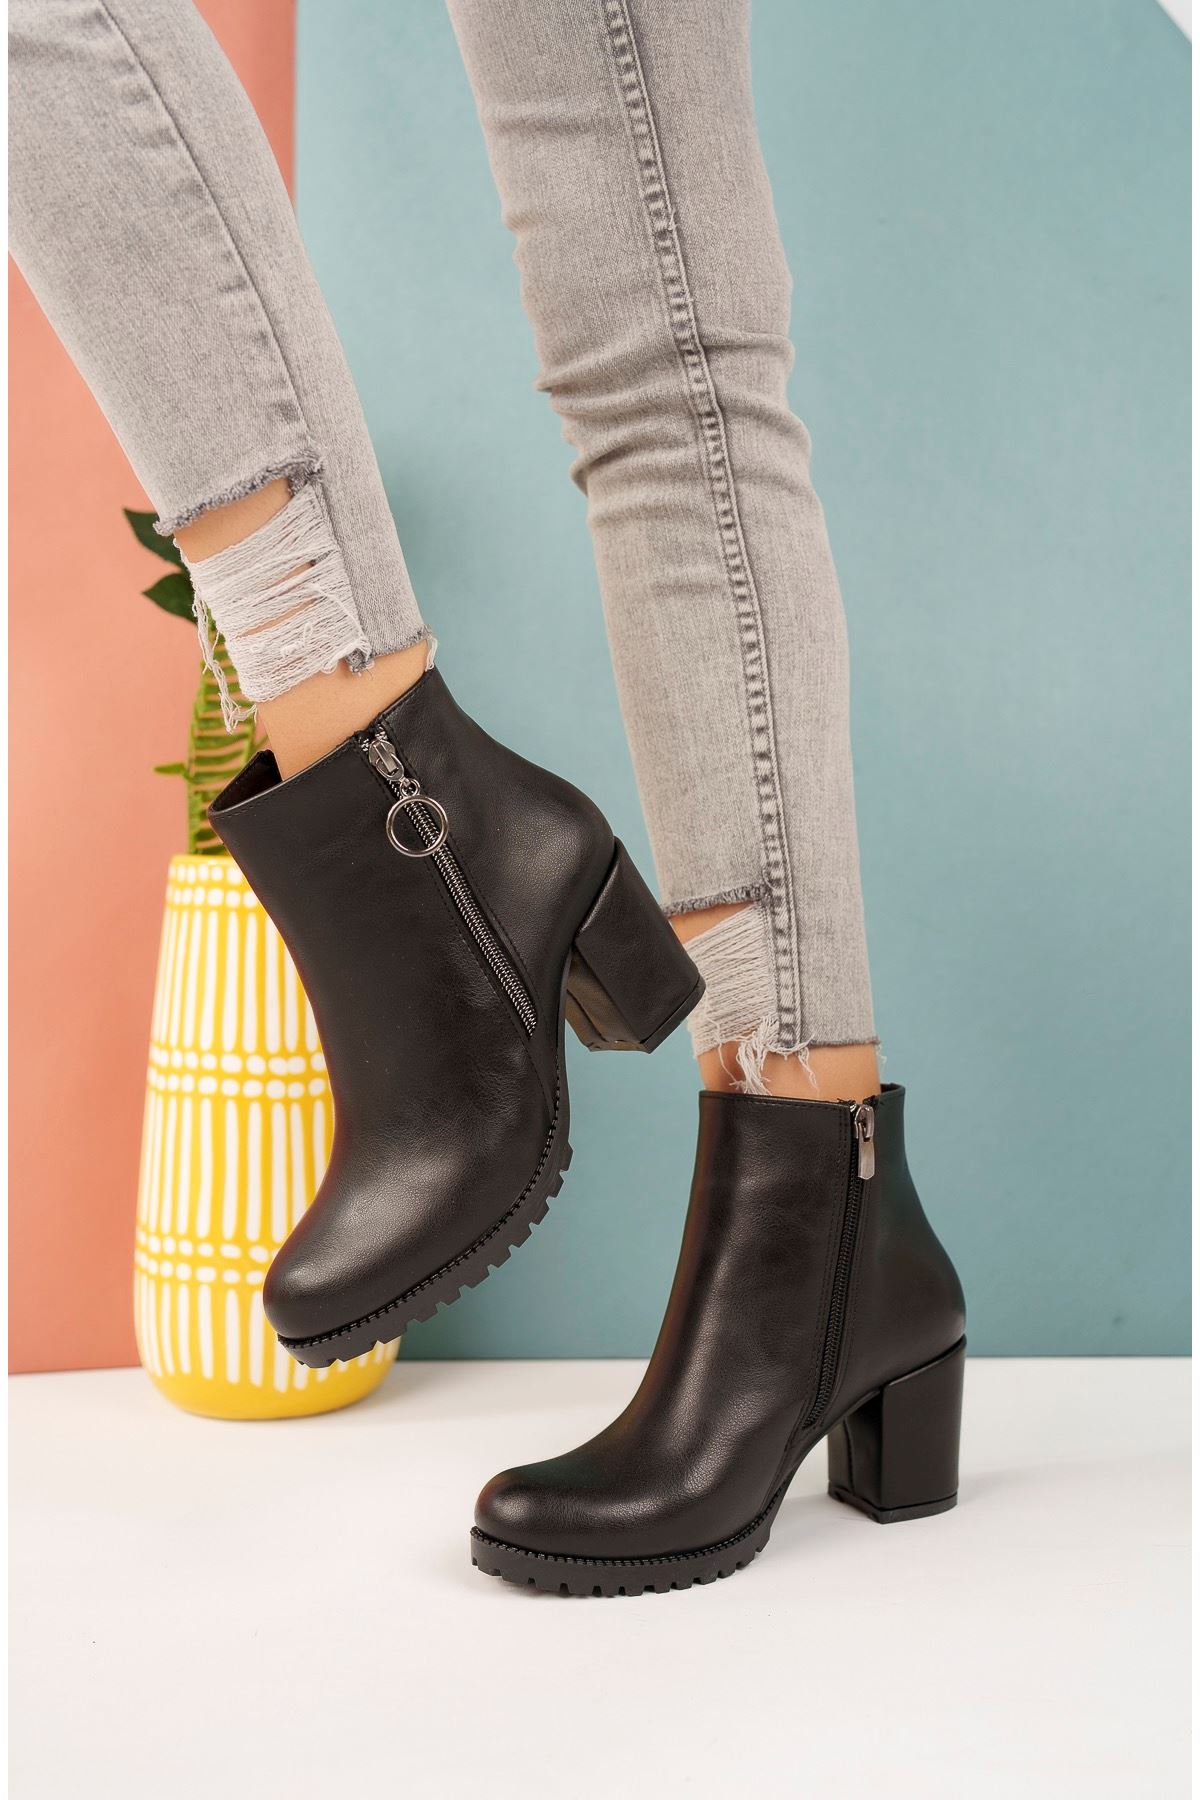 Black Skin Women's Boots with Zipper Detail